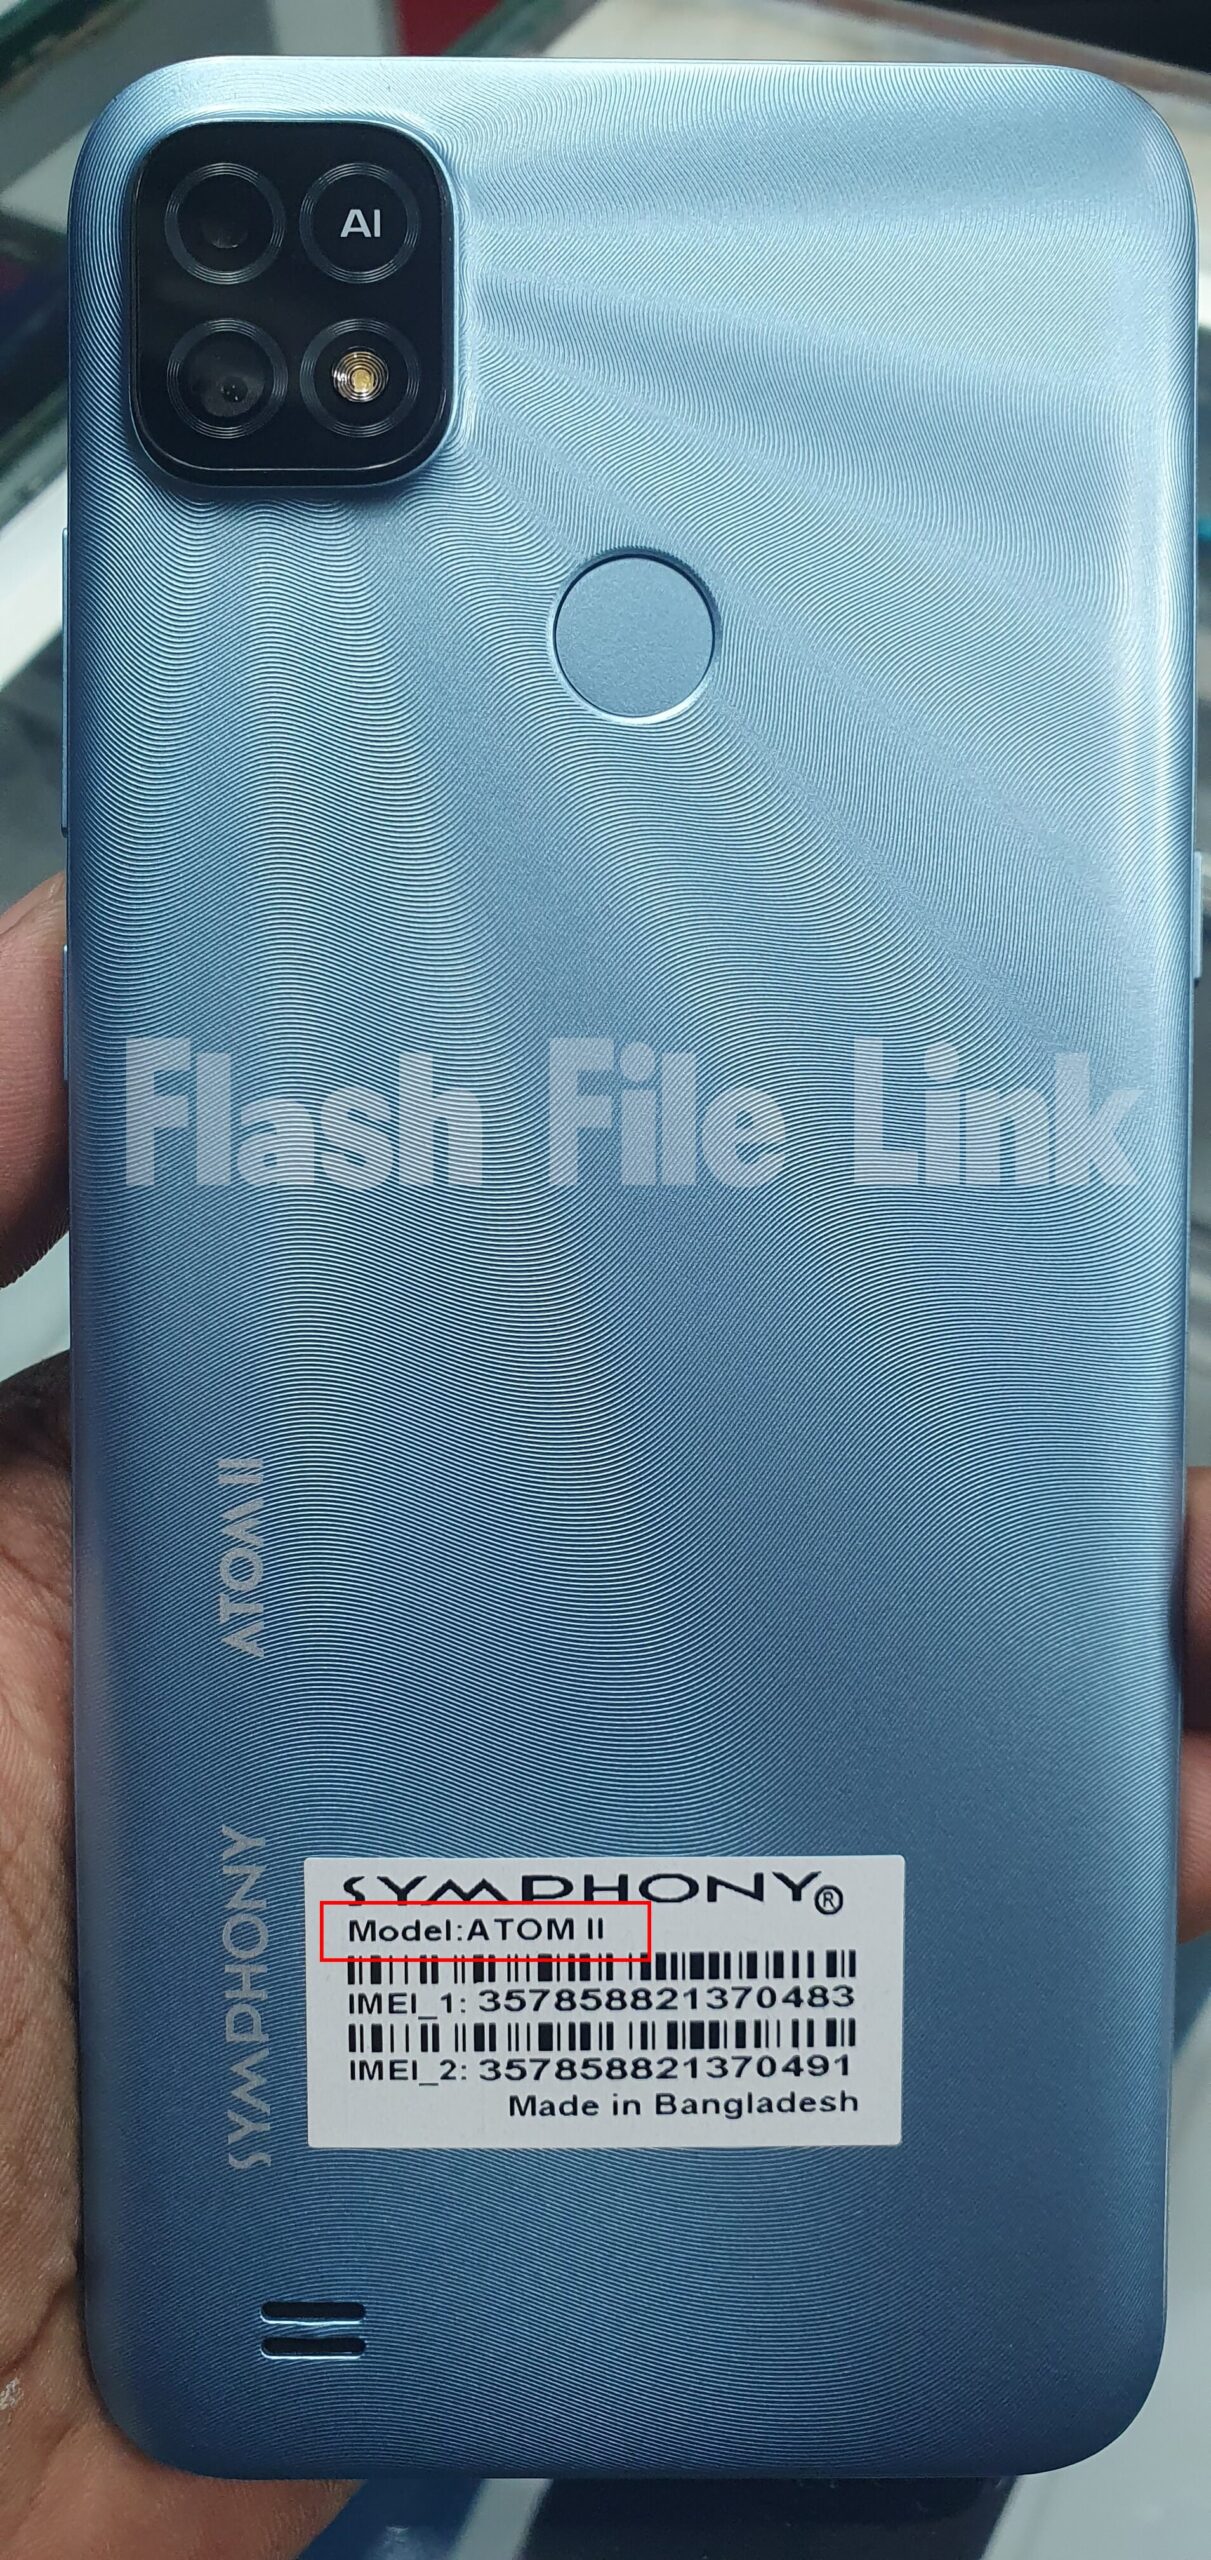 Symphony Atom 2 II Flash File SPD (Hang Logo Frp Fix) Firmware